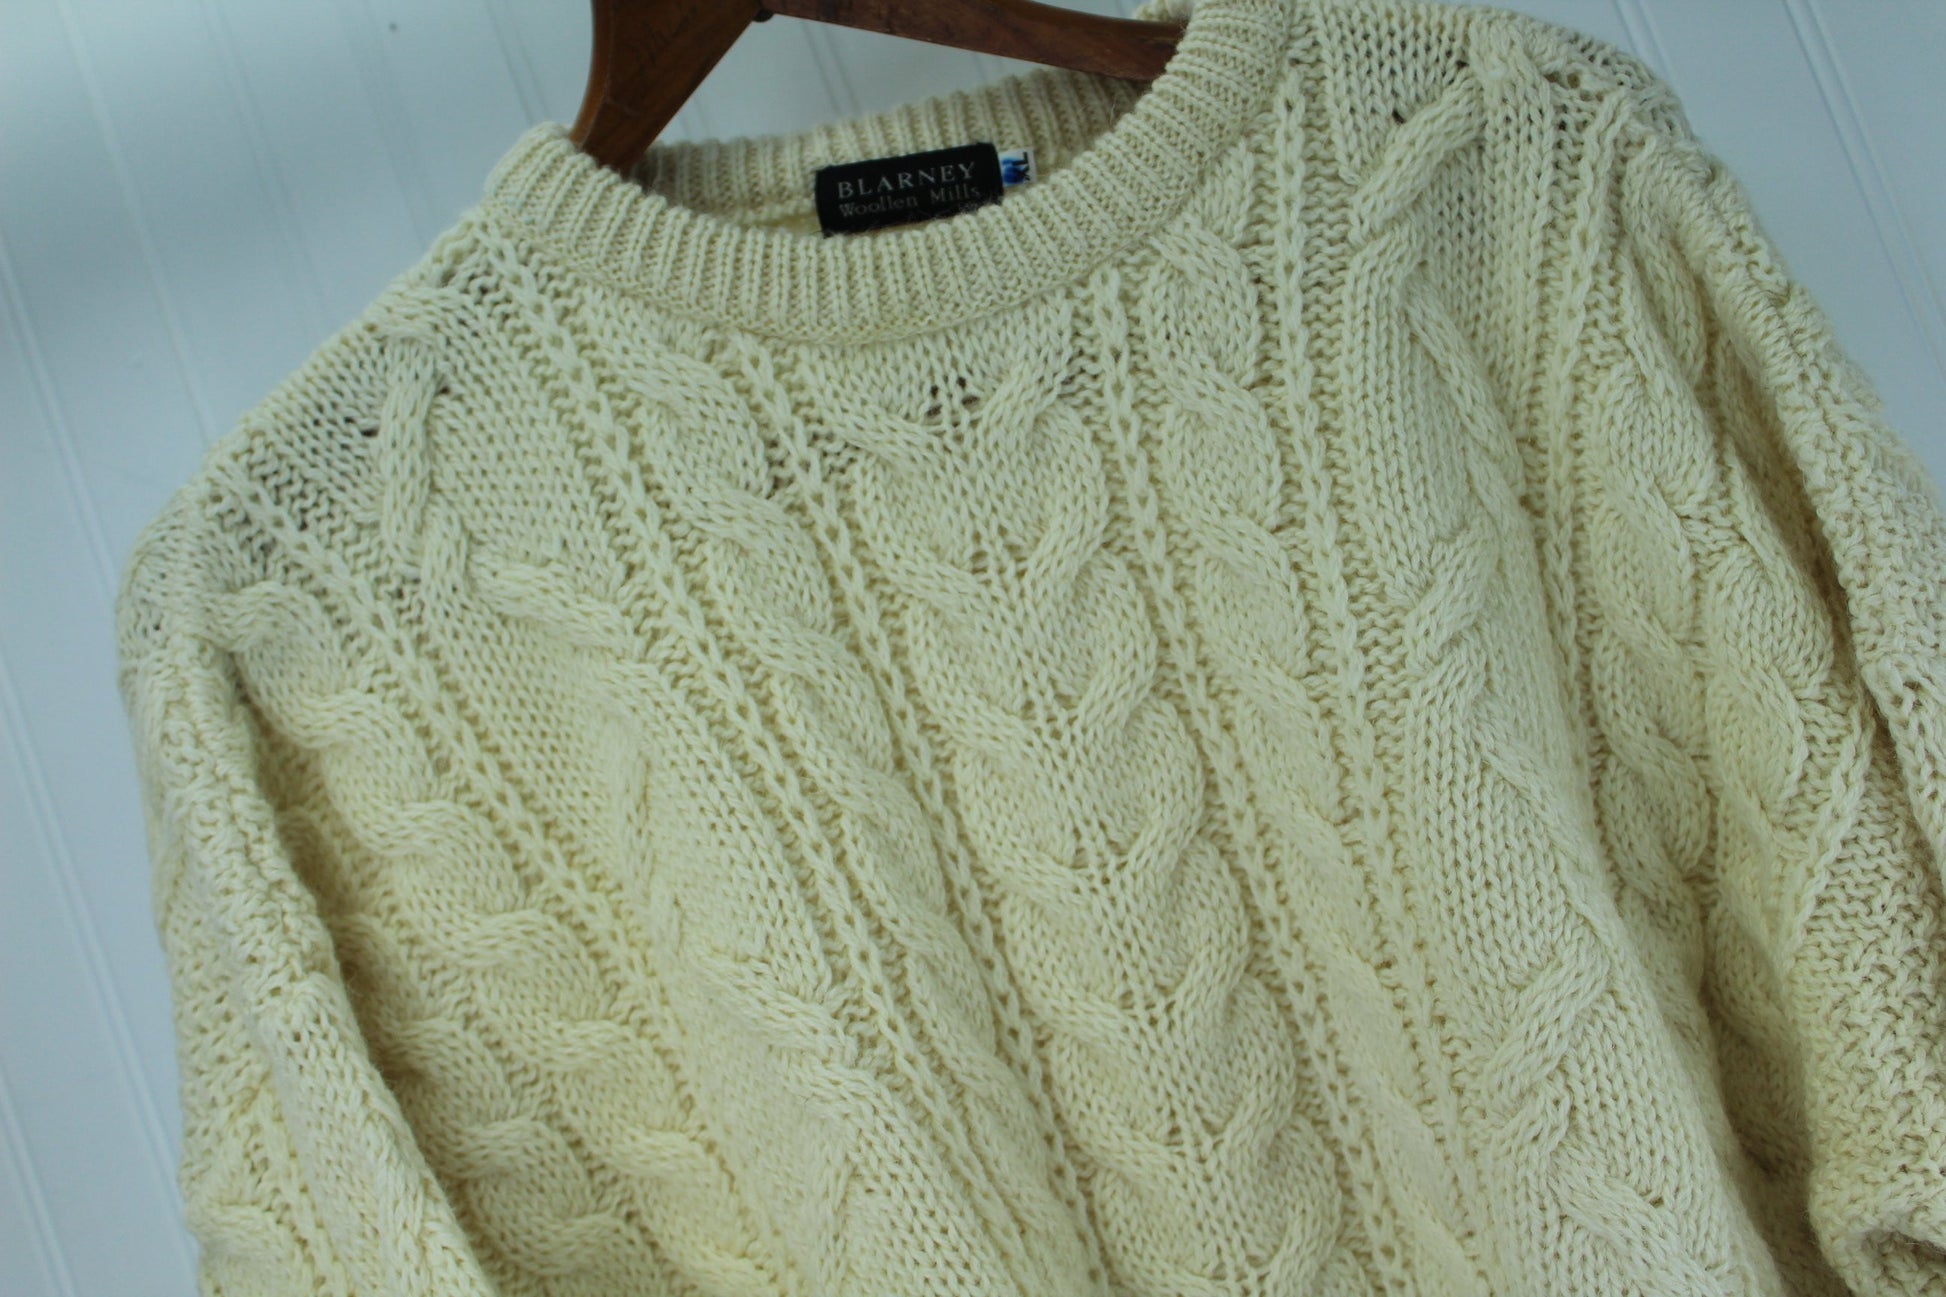 Blarney Mens Wool Pullover Sweater - Ivory Aran Style - XLarge - Ireland warm